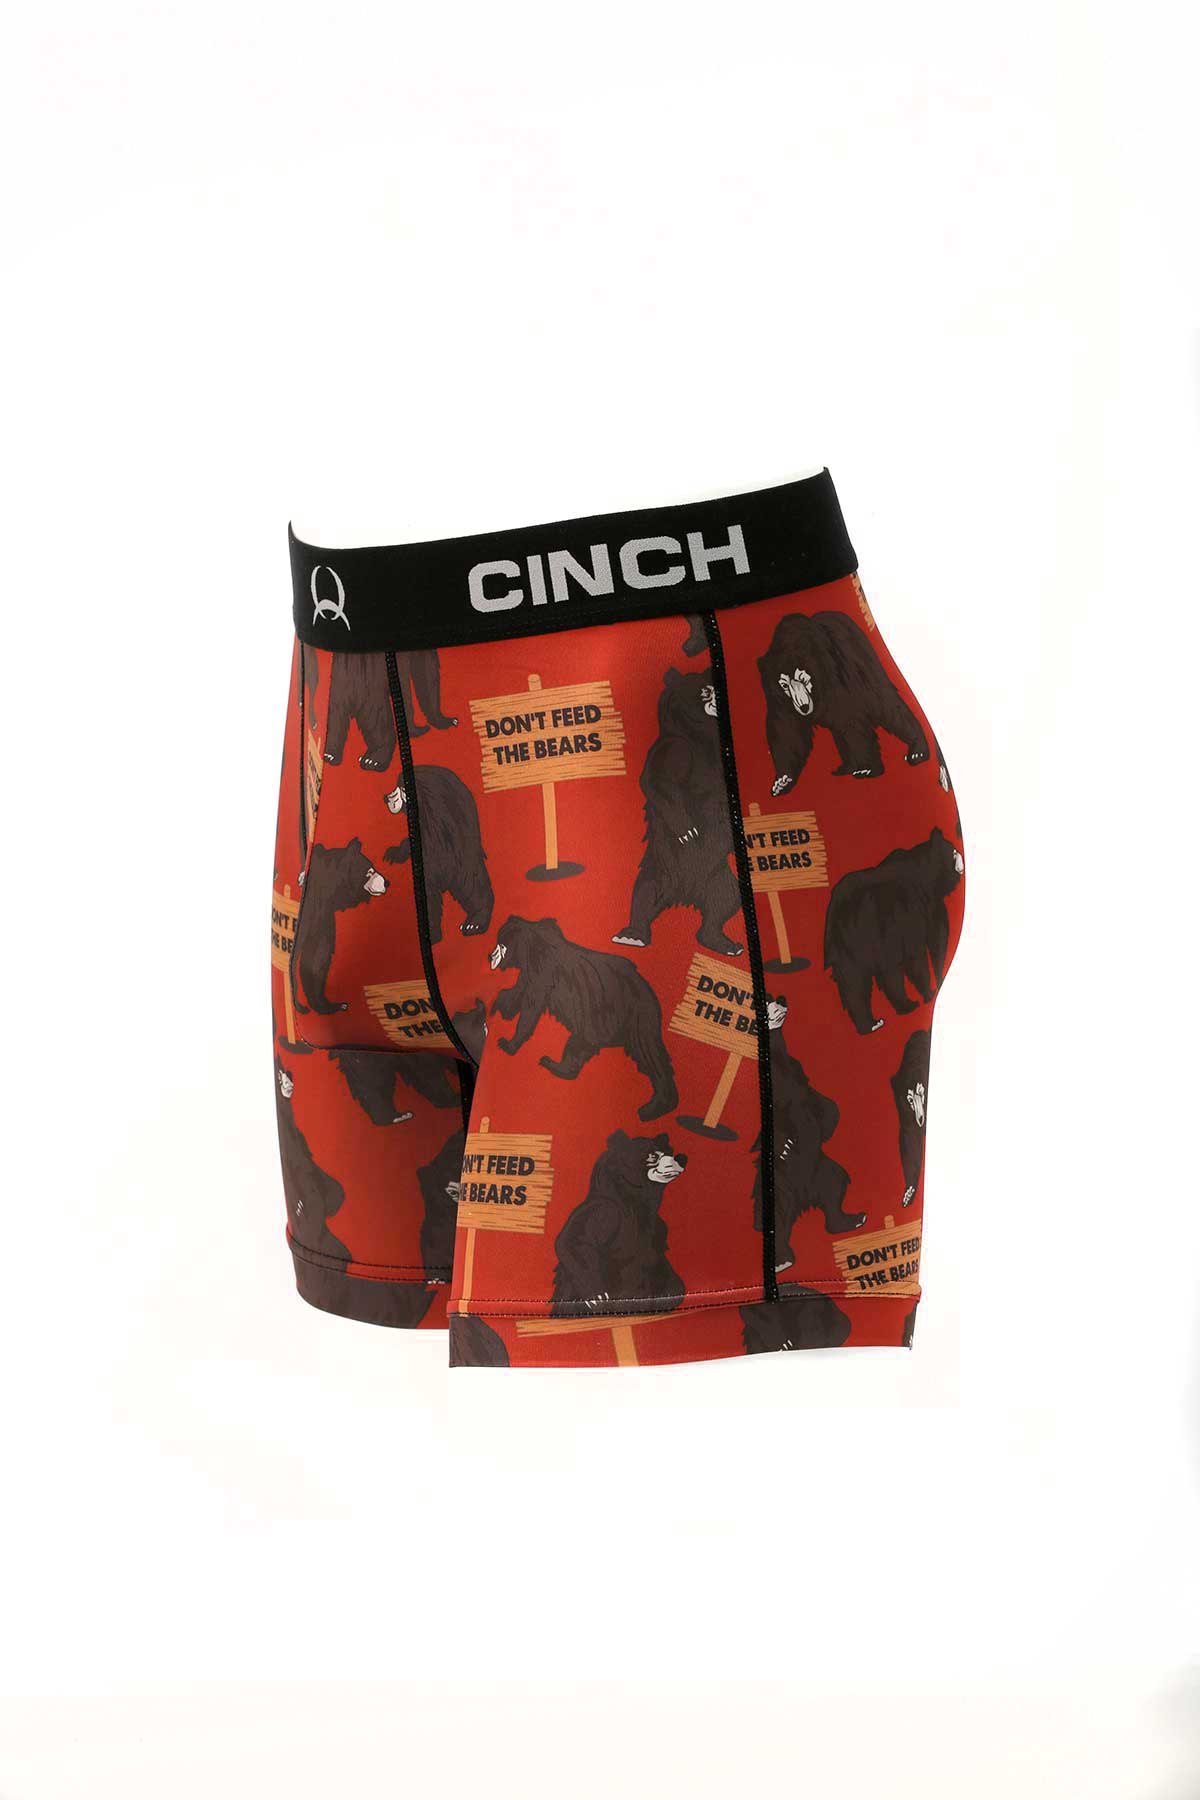 CINCH MEN'S 6" BEARS BOXER BRIEFS - RED